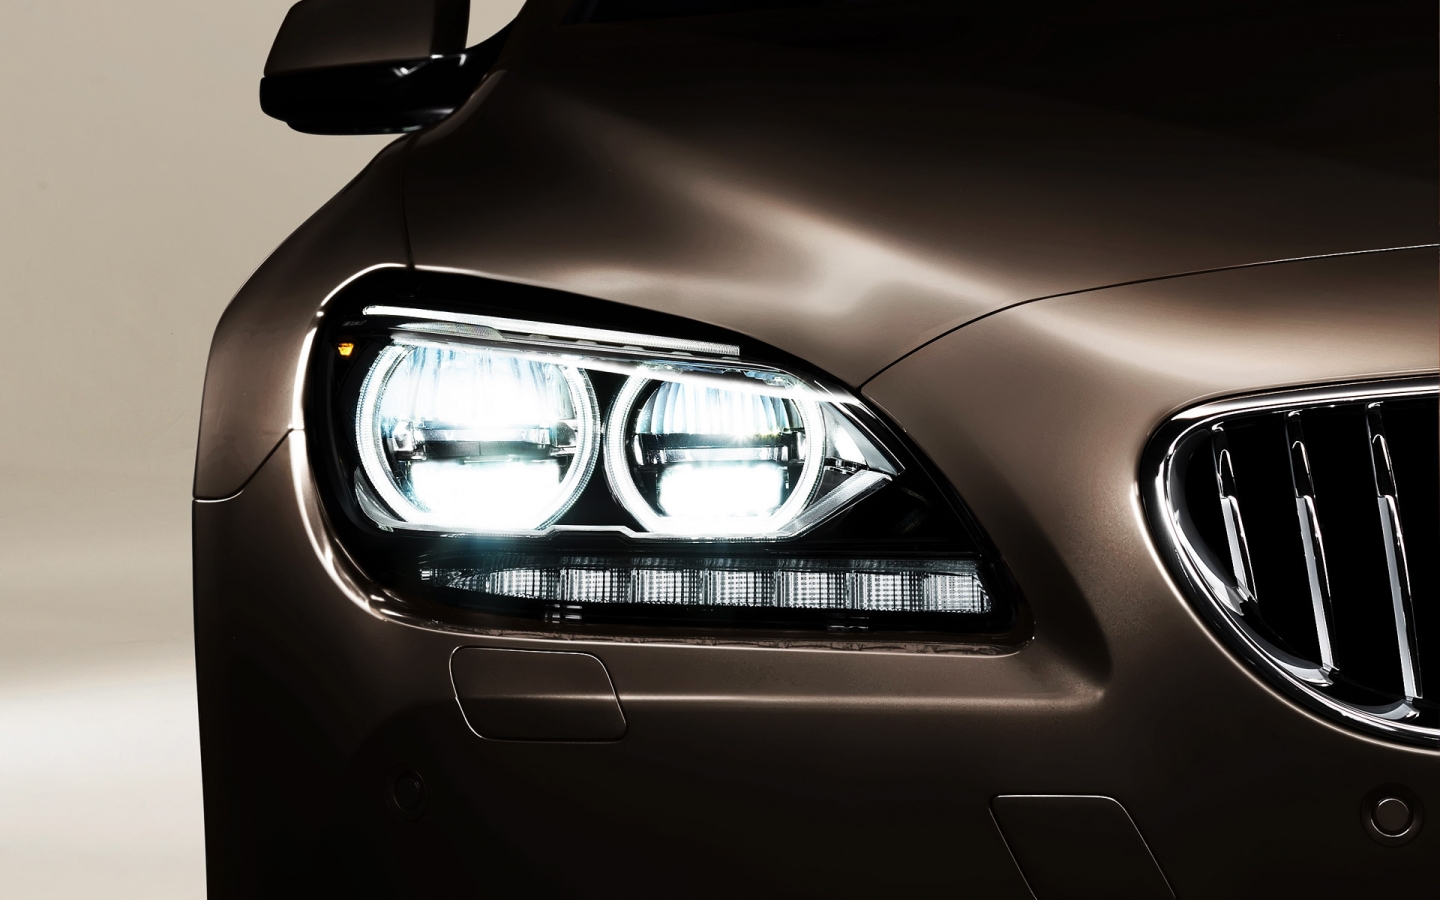 BMW 6 Series 2013 Headlight for 1440 x 900 widescreen resolution